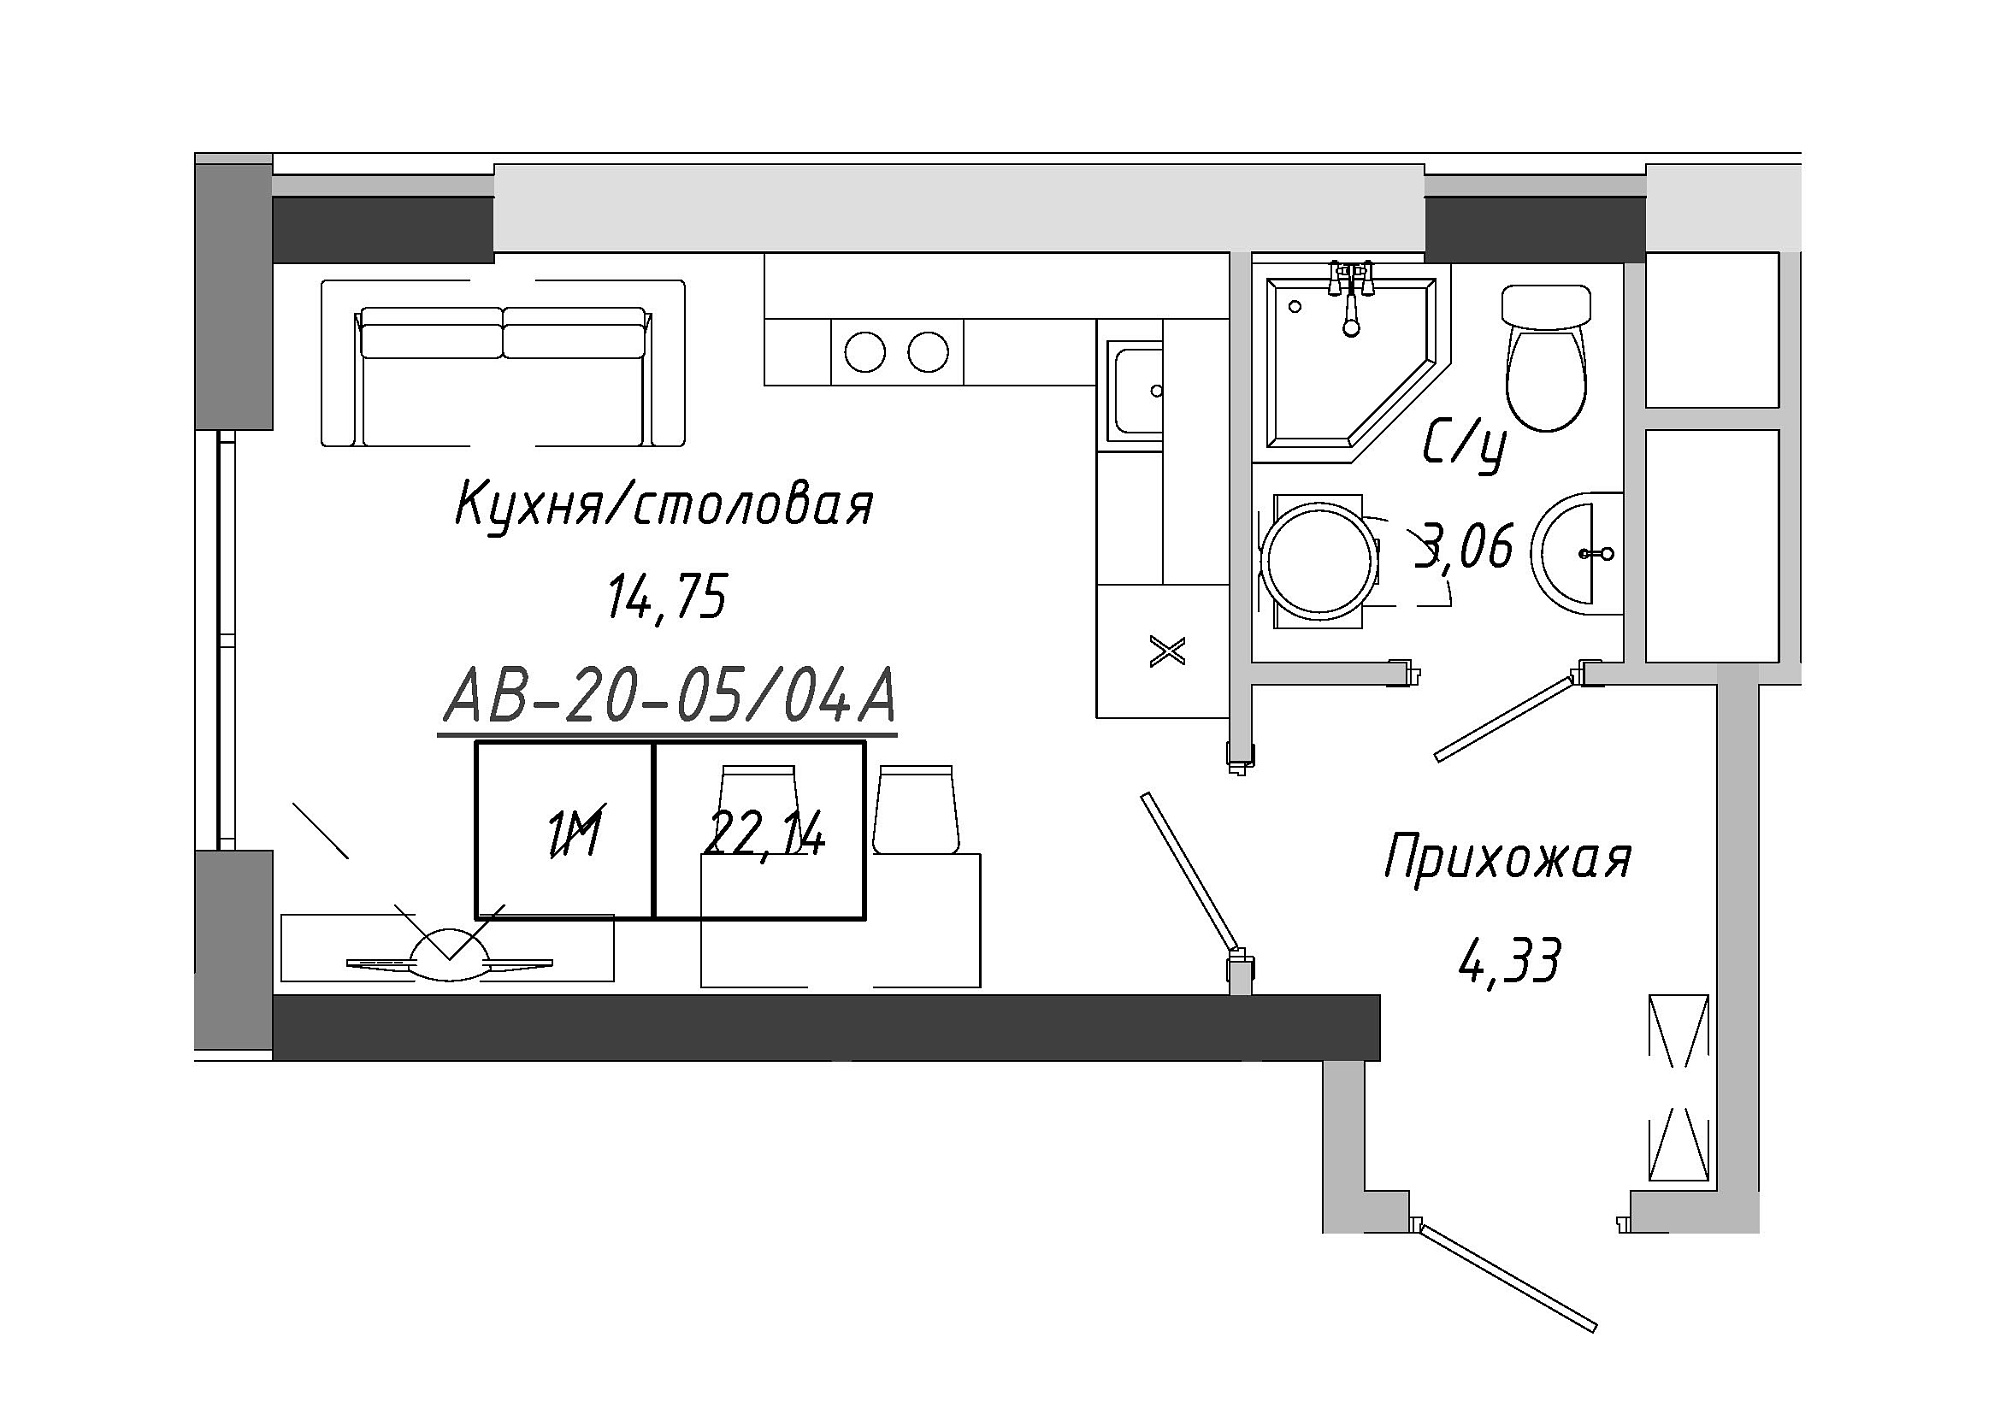 Planning Smart flats area 21.3m2, AB-20-05/0004а.